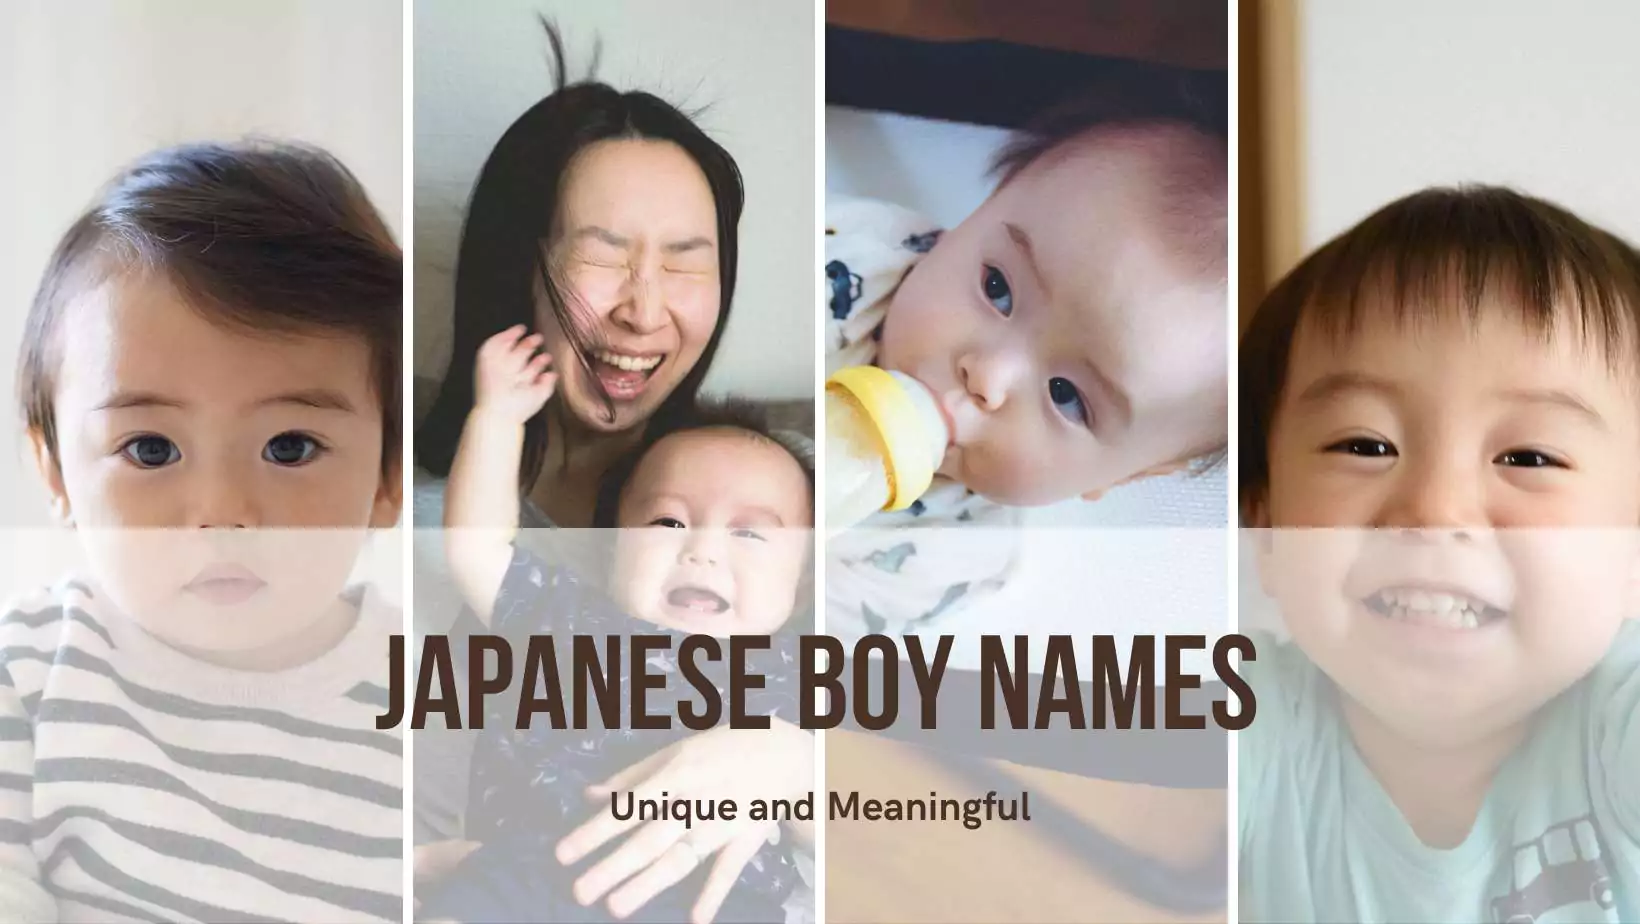 Japanese boy names